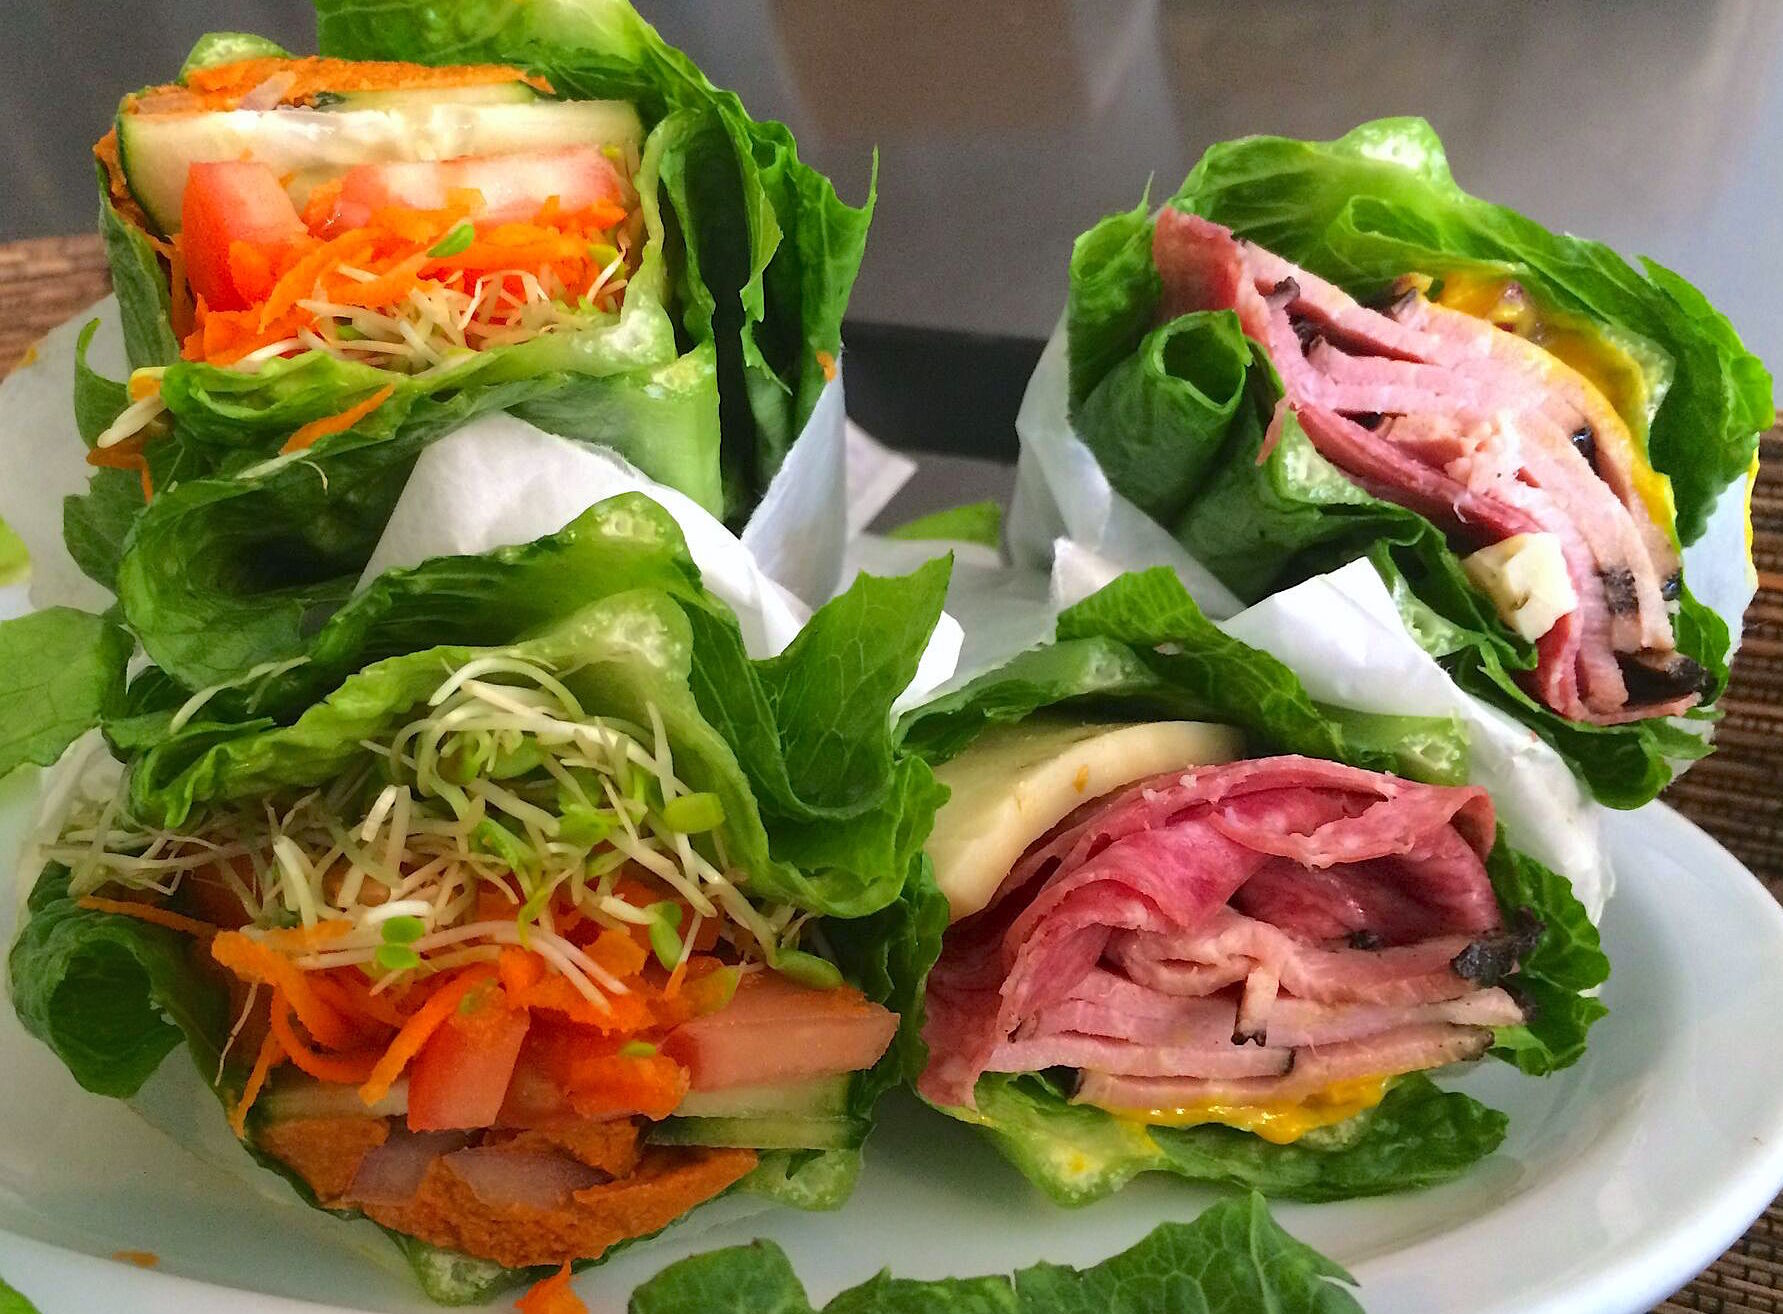 Hana Picnic lunch Lettuce Wrap Sandwiches